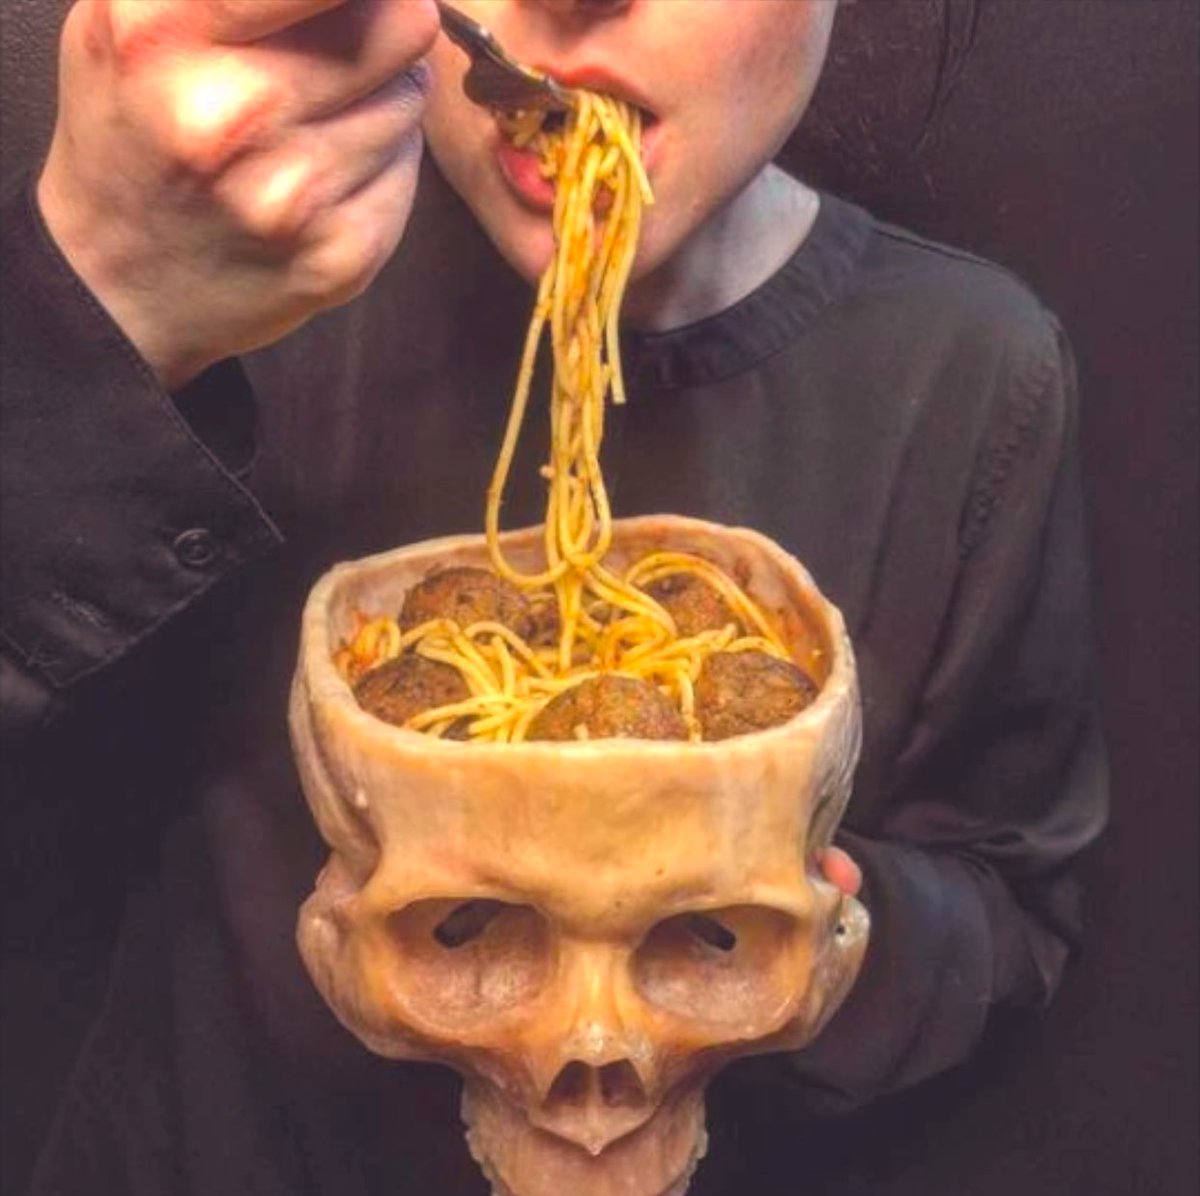 Welcome to the #bonezone 
Just like mama used to make… #skullghetti #macaroniandgravy #spaghetti #skull #pasta #bowl #pastabowl #noodles #meatballs #spaghettiandmeatballs